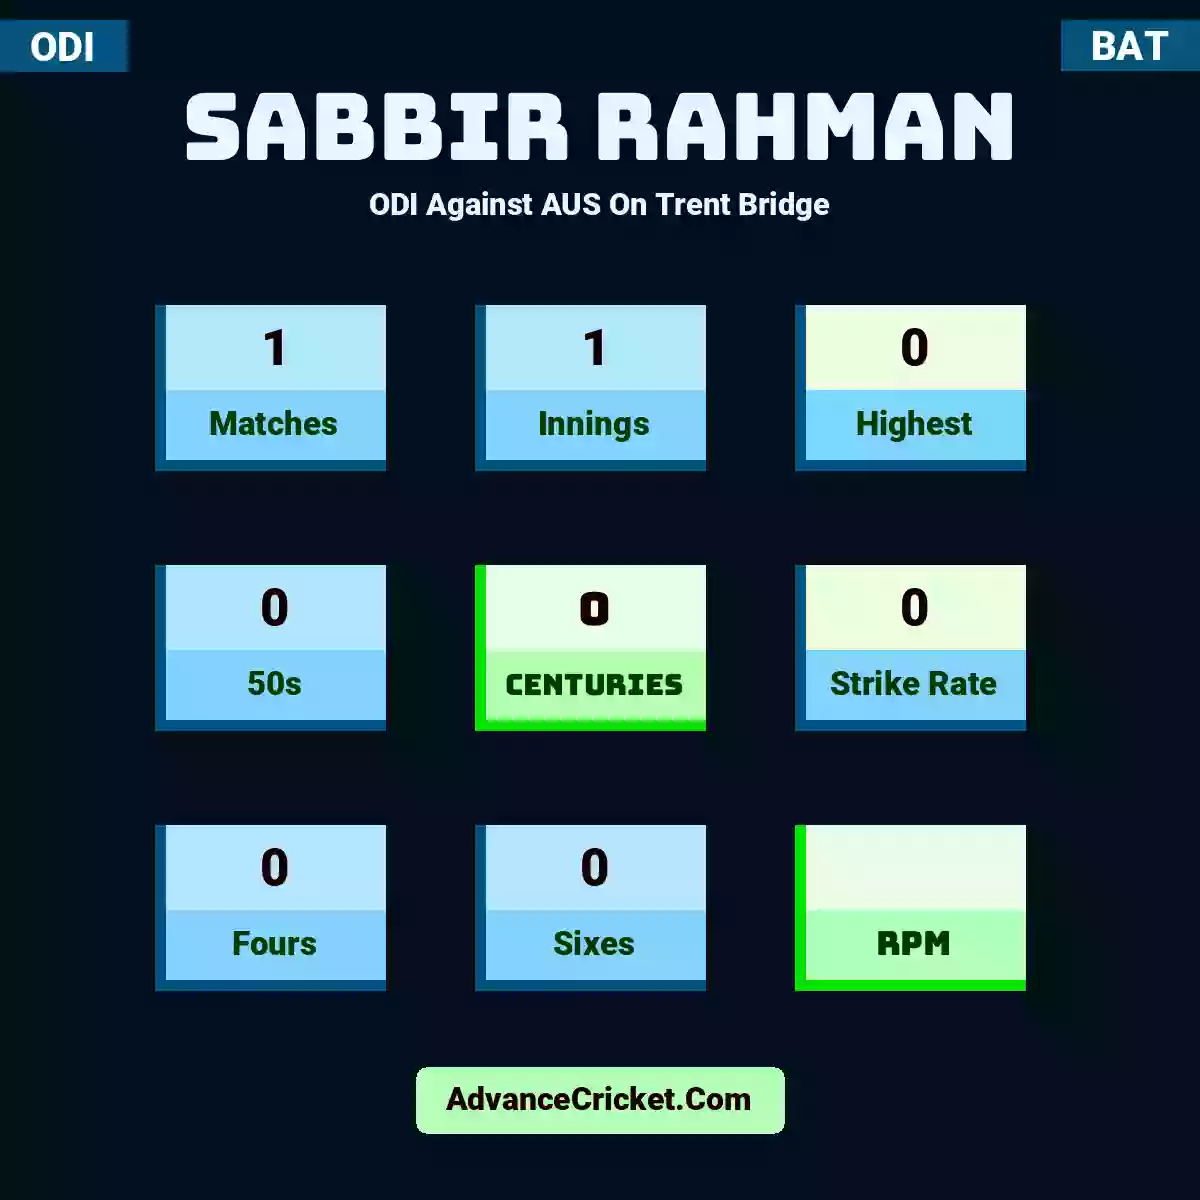 Sabbir Rahman ODI  Against AUS On Trent Bridge, Sabbir Rahman played 1 matches, scored 0 runs as highest, 0 half-centuries, and 0 centuries, with a strike rate of 0. S.Rahman hit 0 fours and 0 sixes.